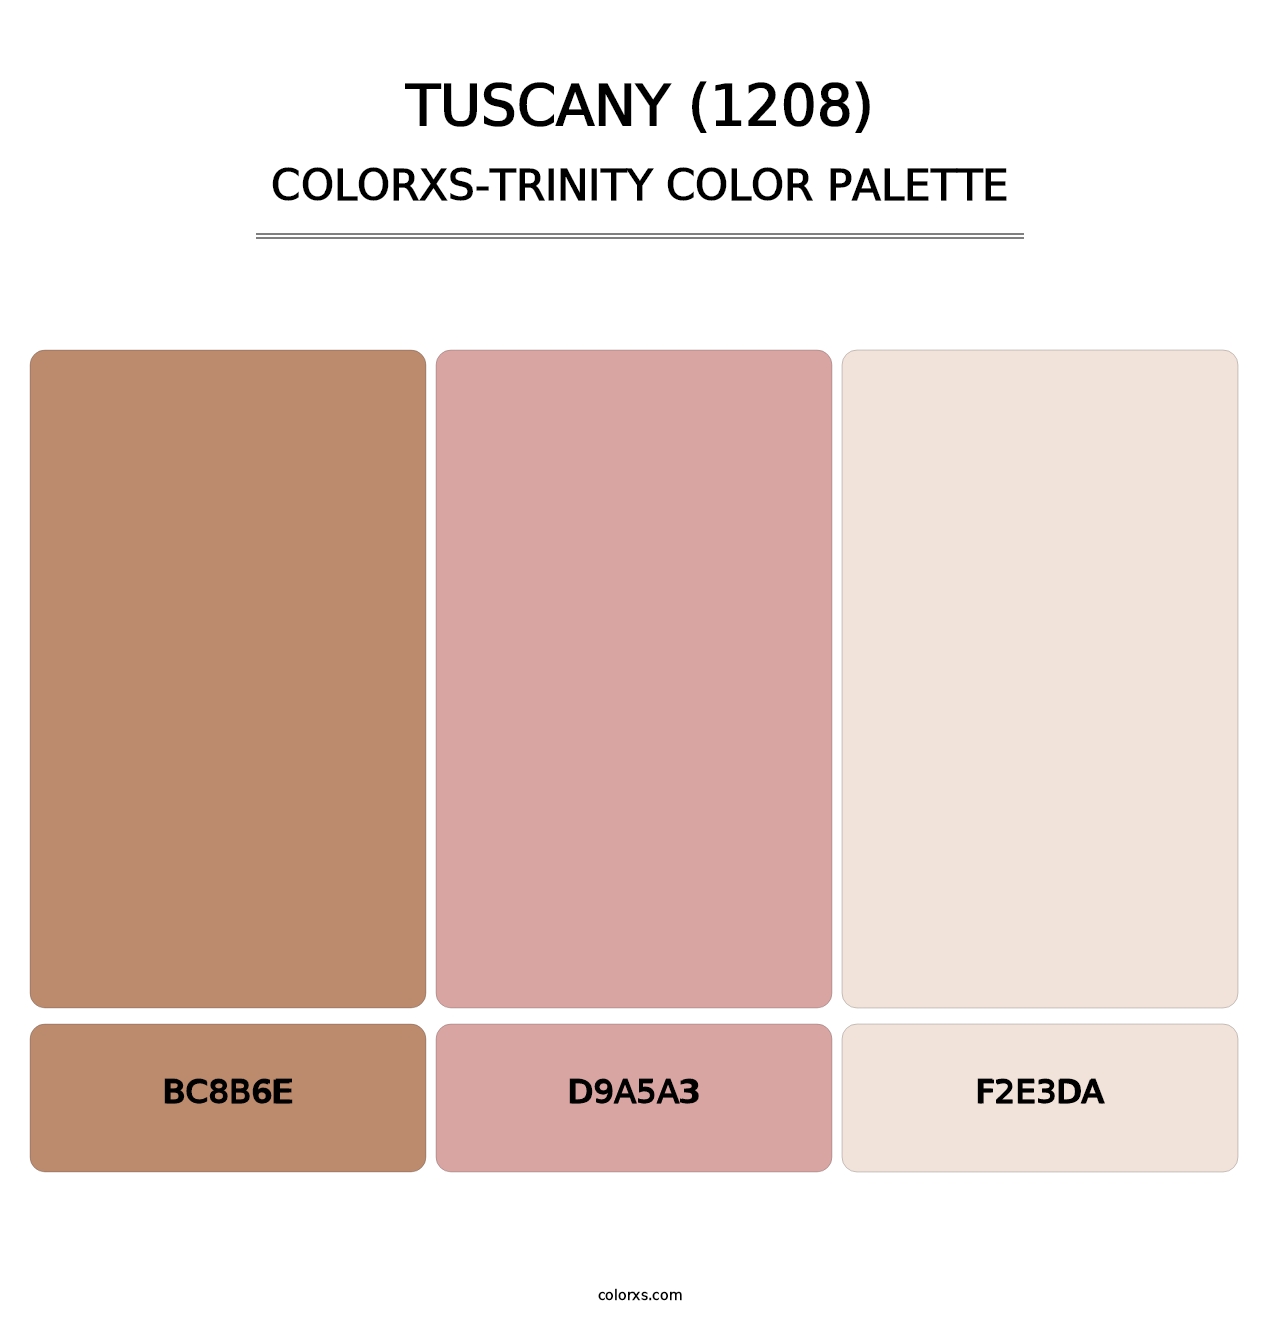 Tuscany (1208) - Colorxs Trinity Palette